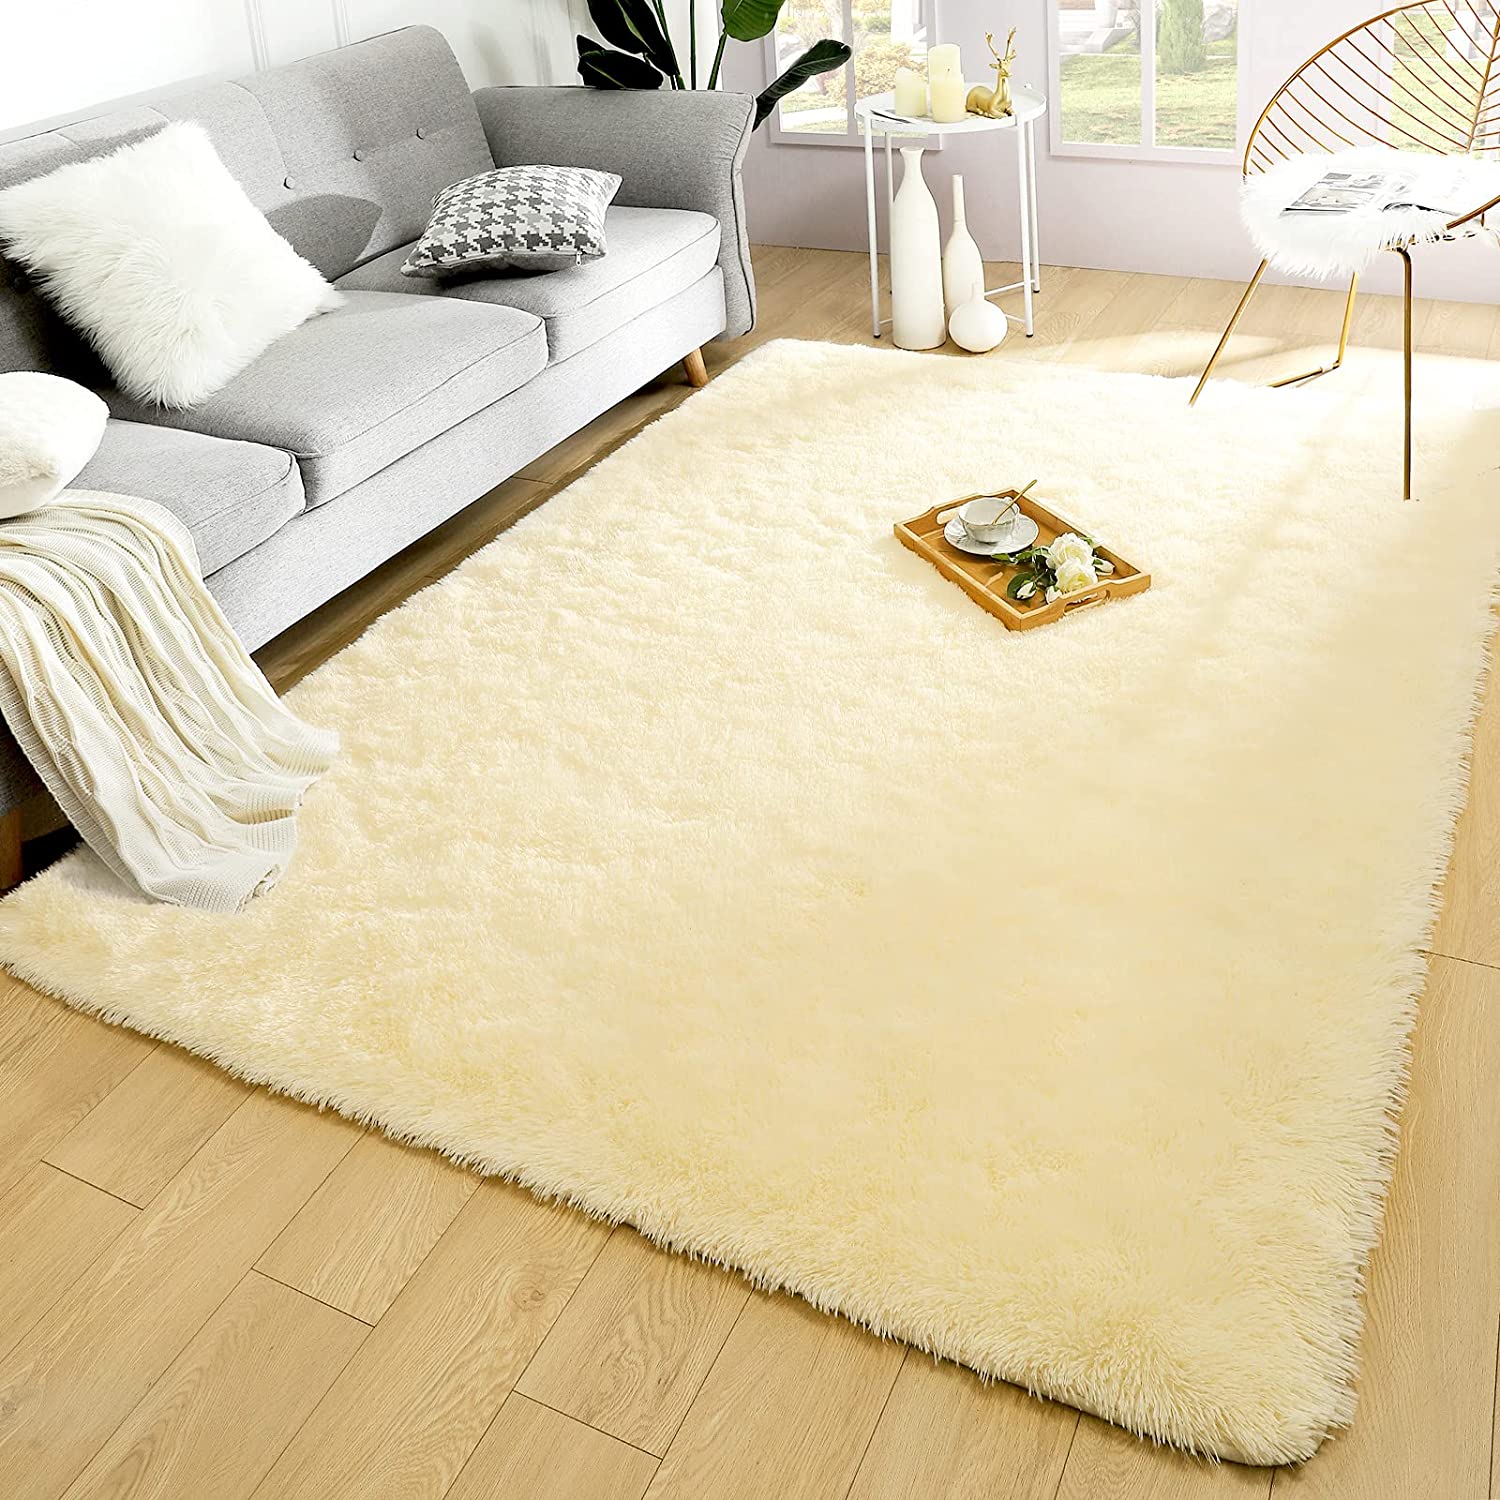 Merelax Soft Modern Indoor Shaggy Area Rug for Bedroom Livingroom